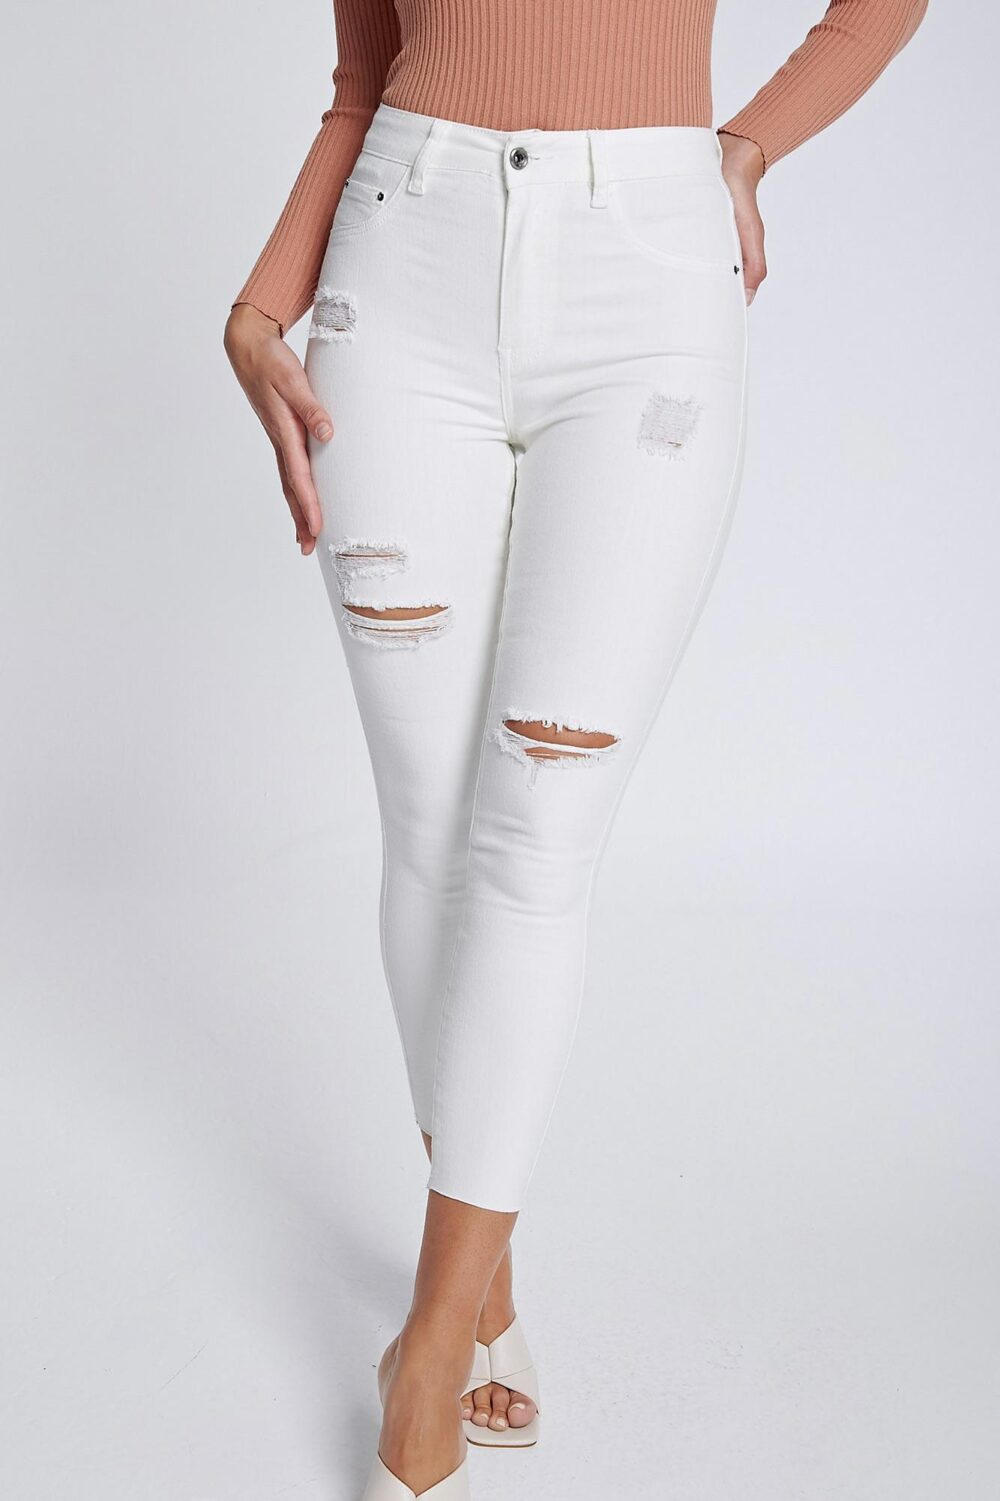 Ladies Jeans Colour is White